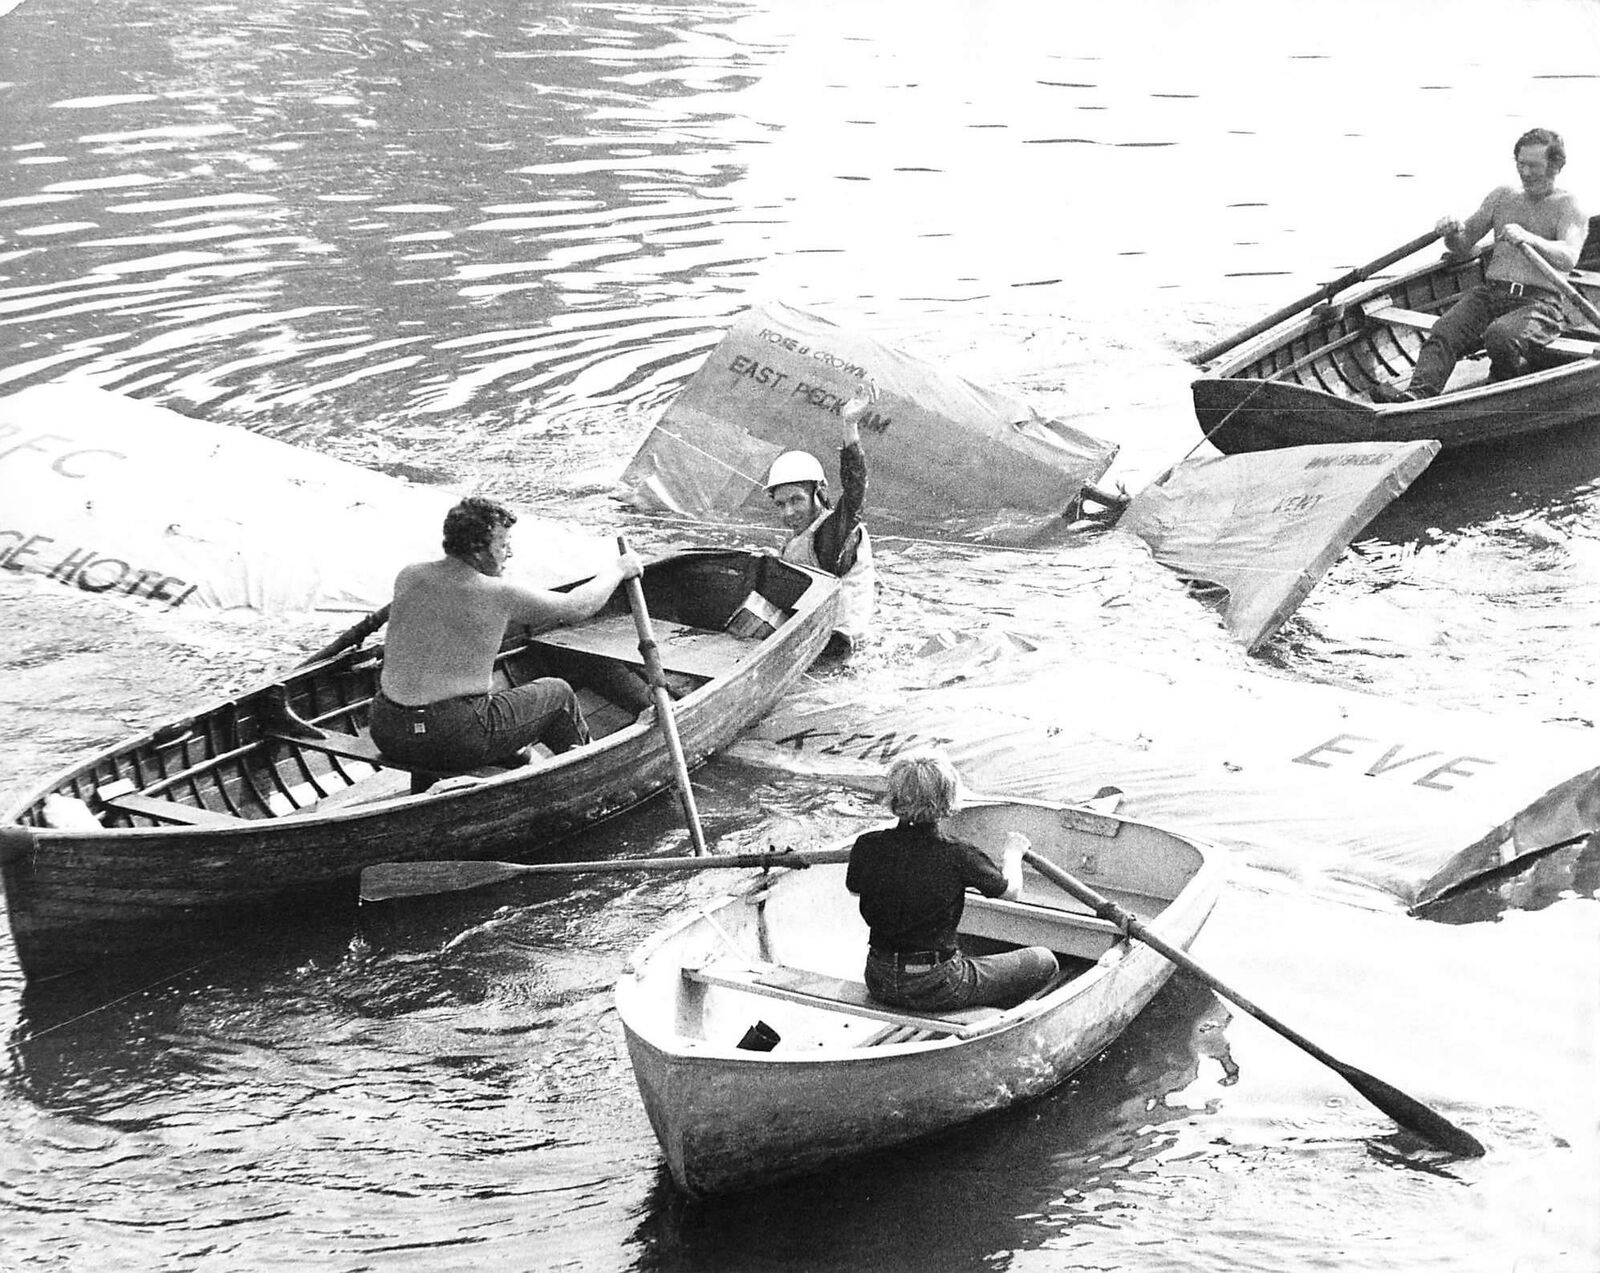 1971 Press Photo Man Flying Plane Machine Branbridge Flying Club rowboats rescue